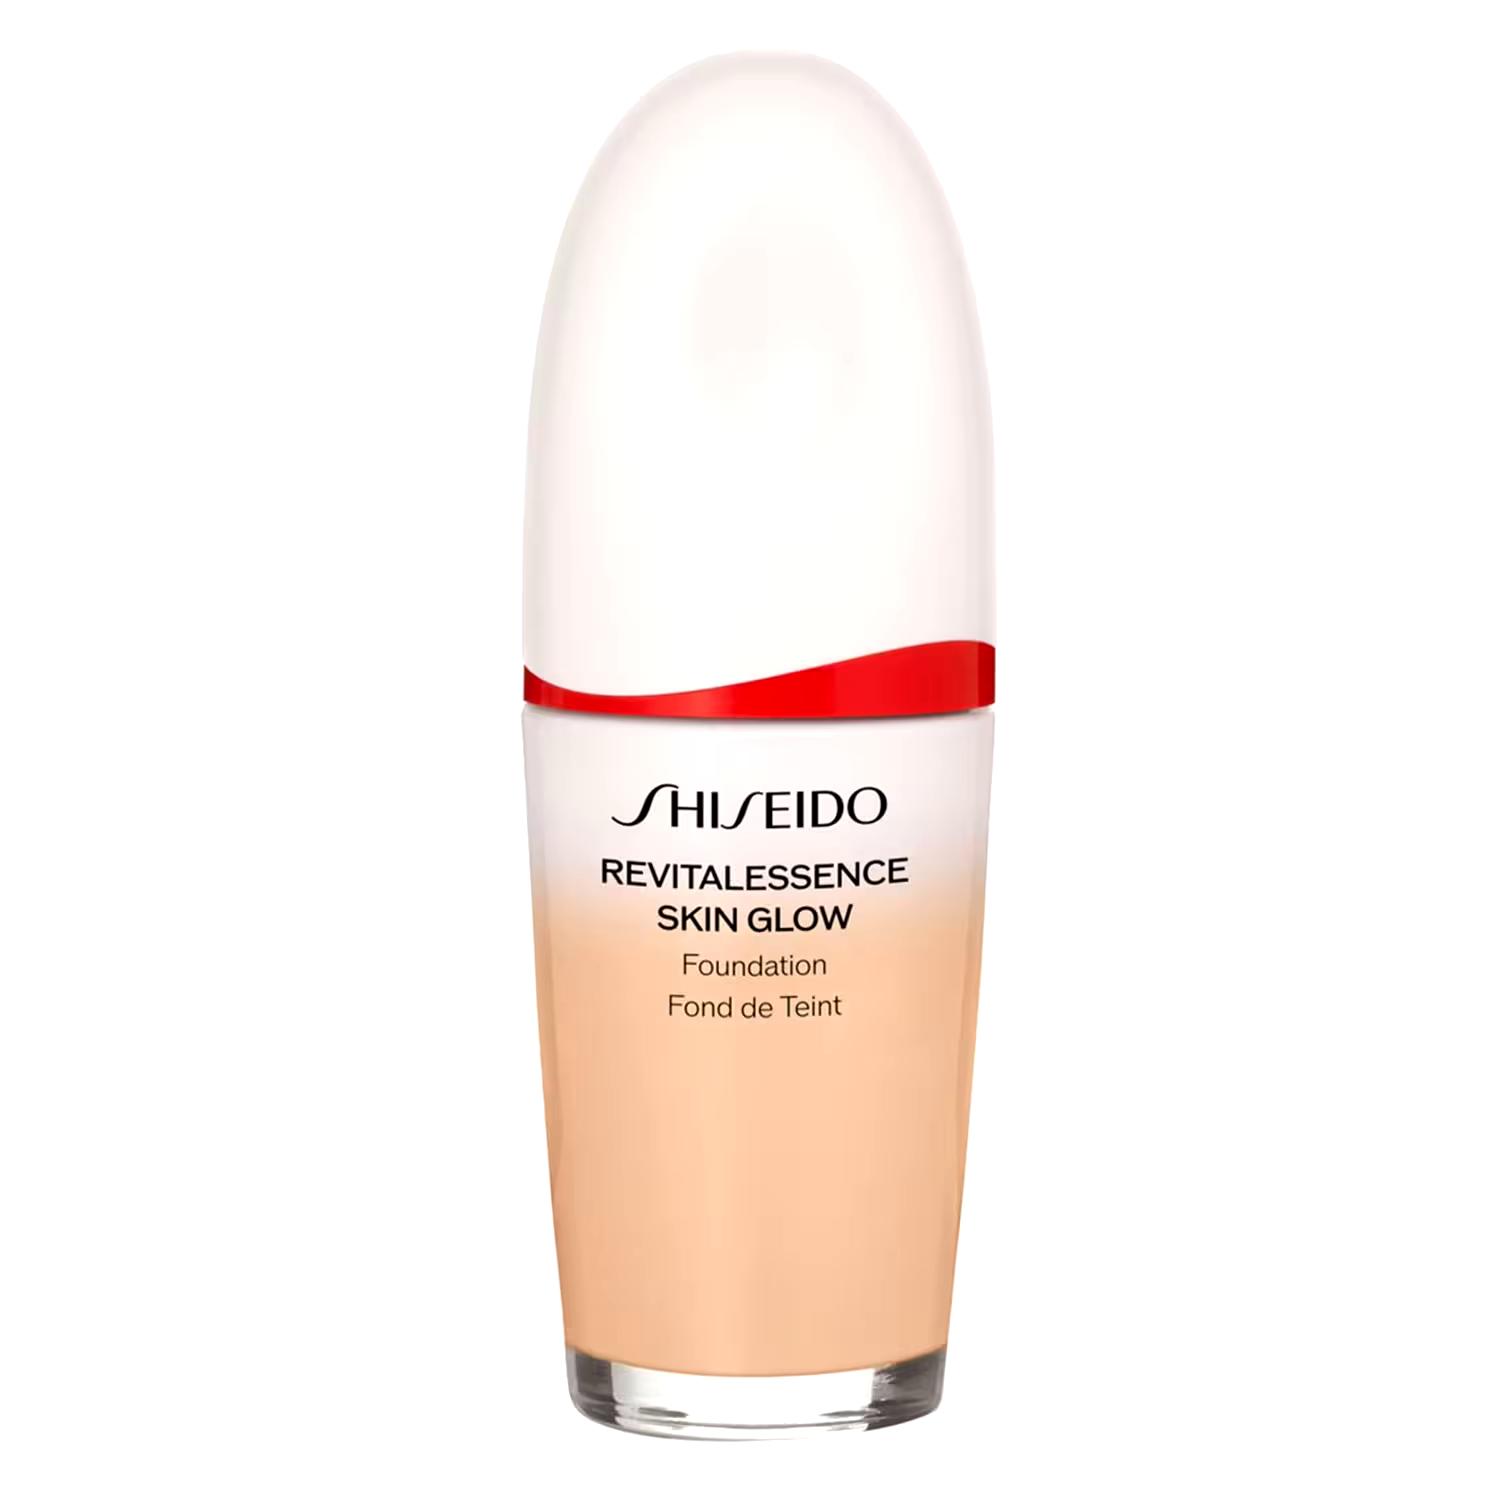 Shiseido Revitalessence Skin Glow Foundation, 30 ml